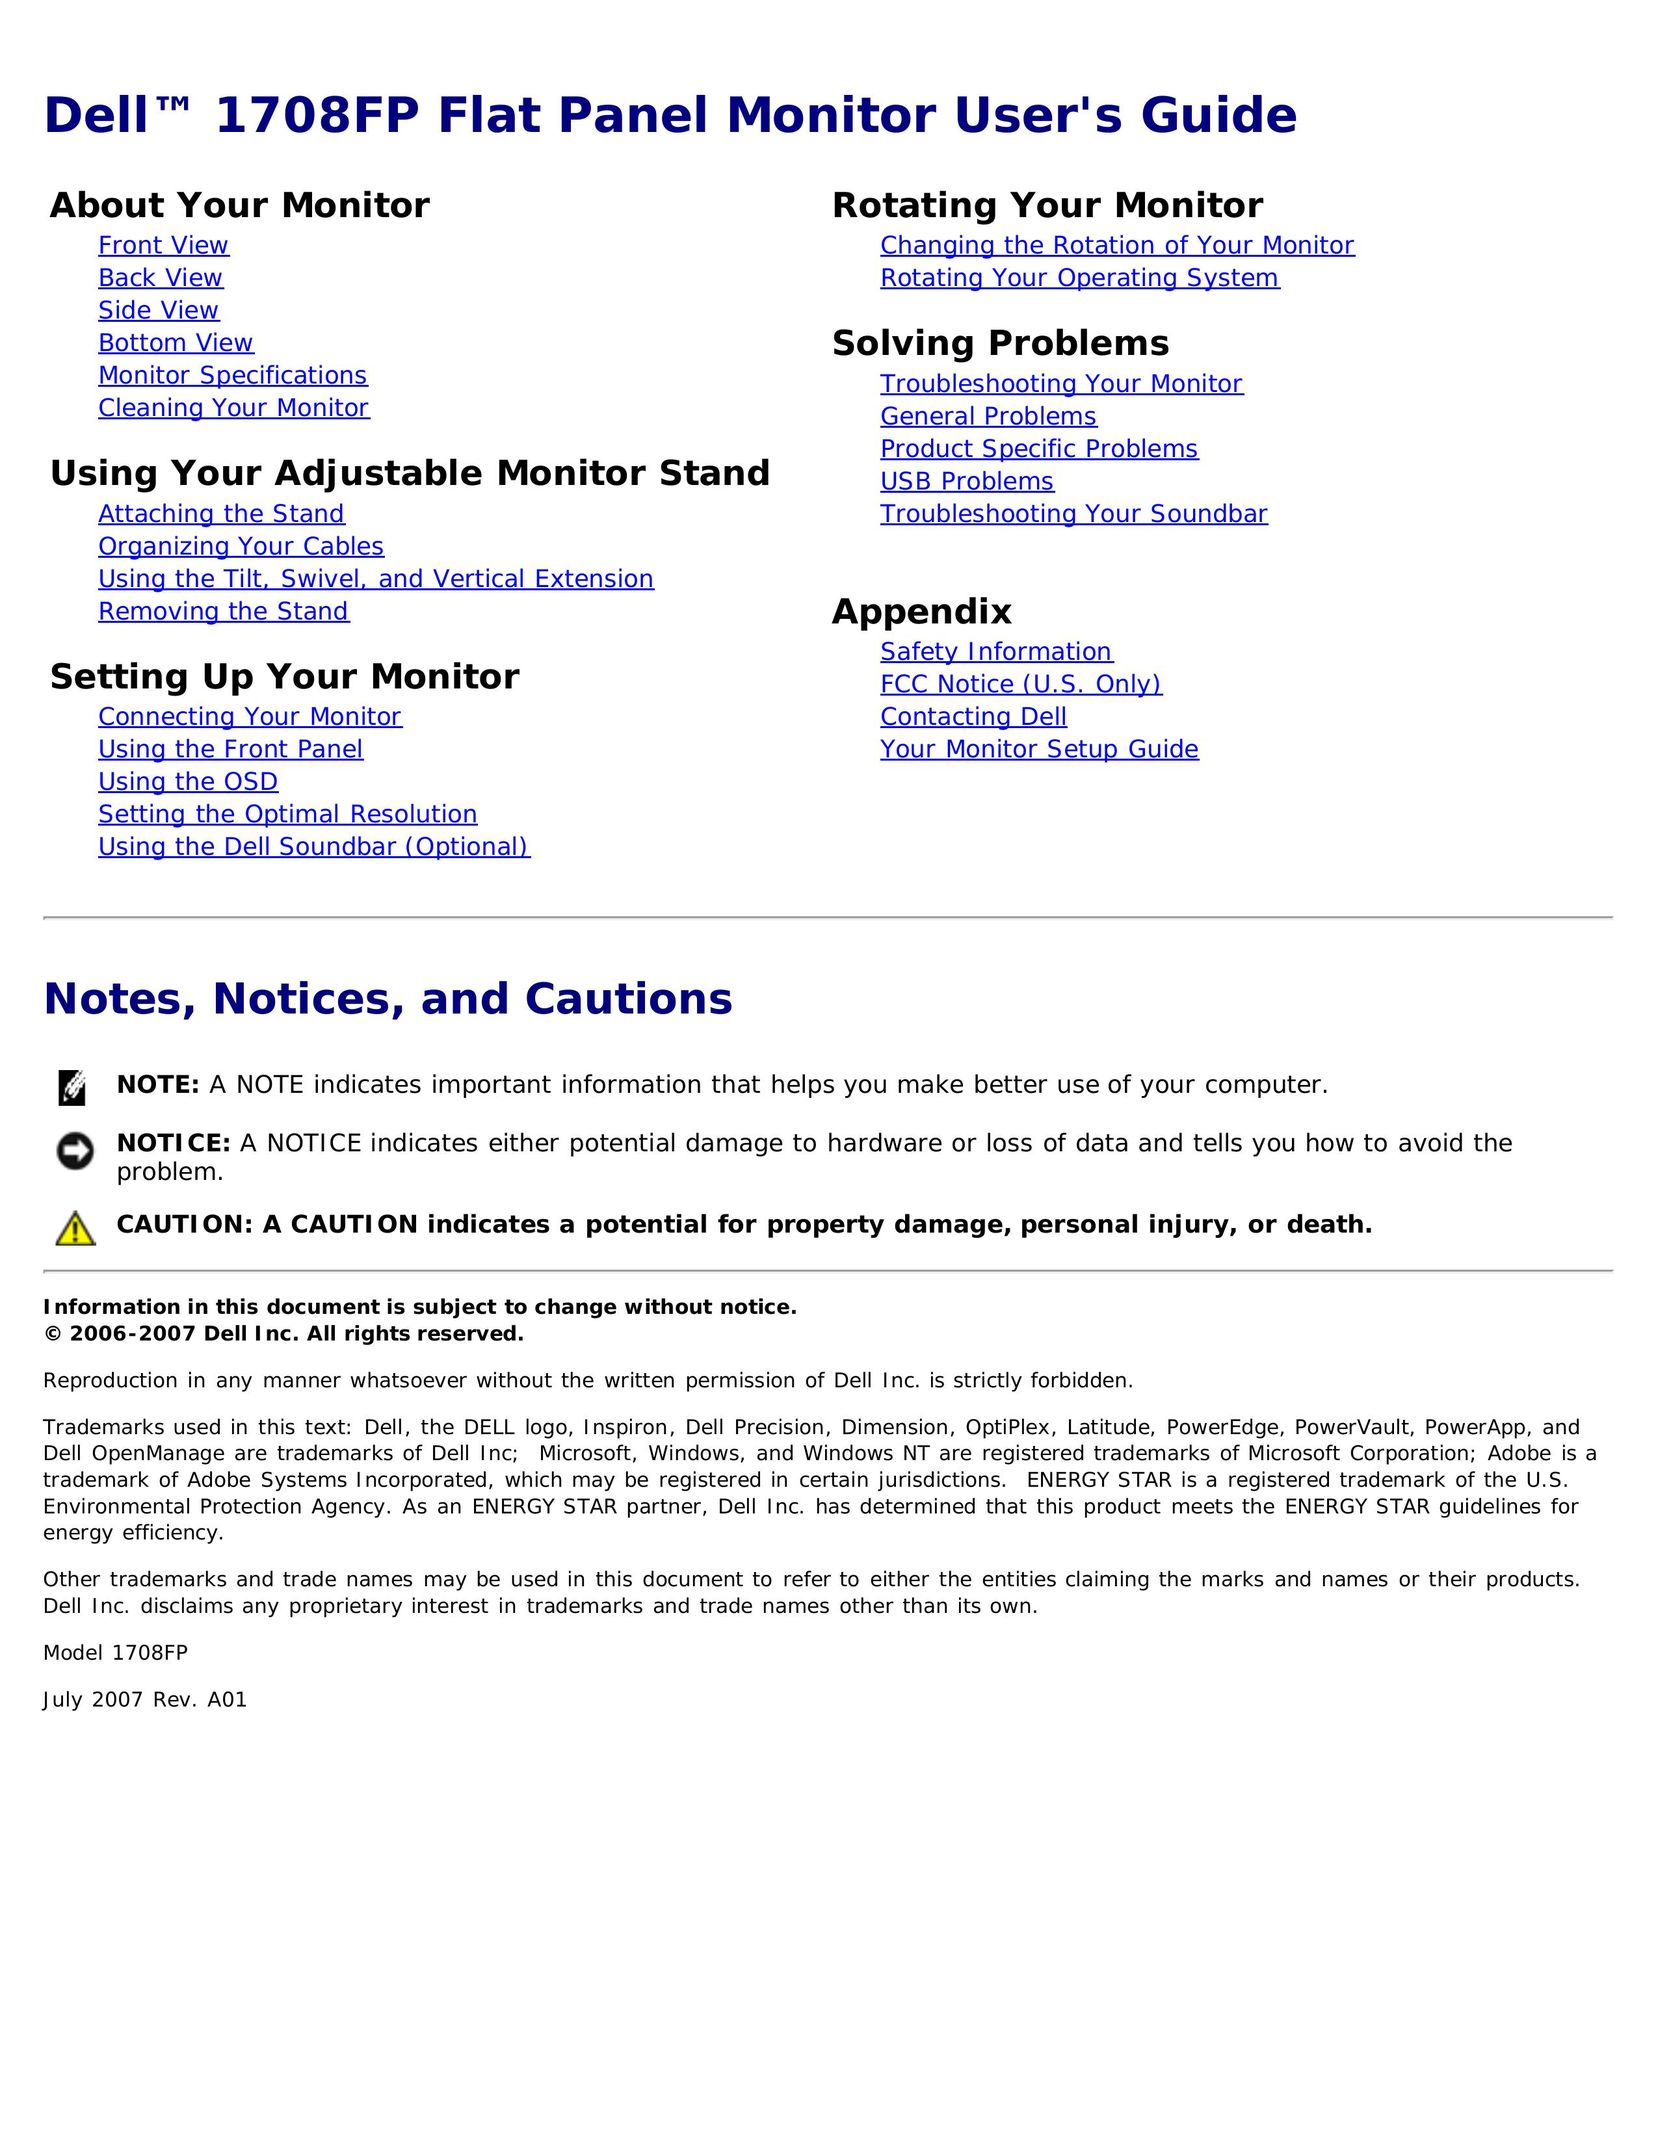 Dell 1708FP Computer Monitor User Manual